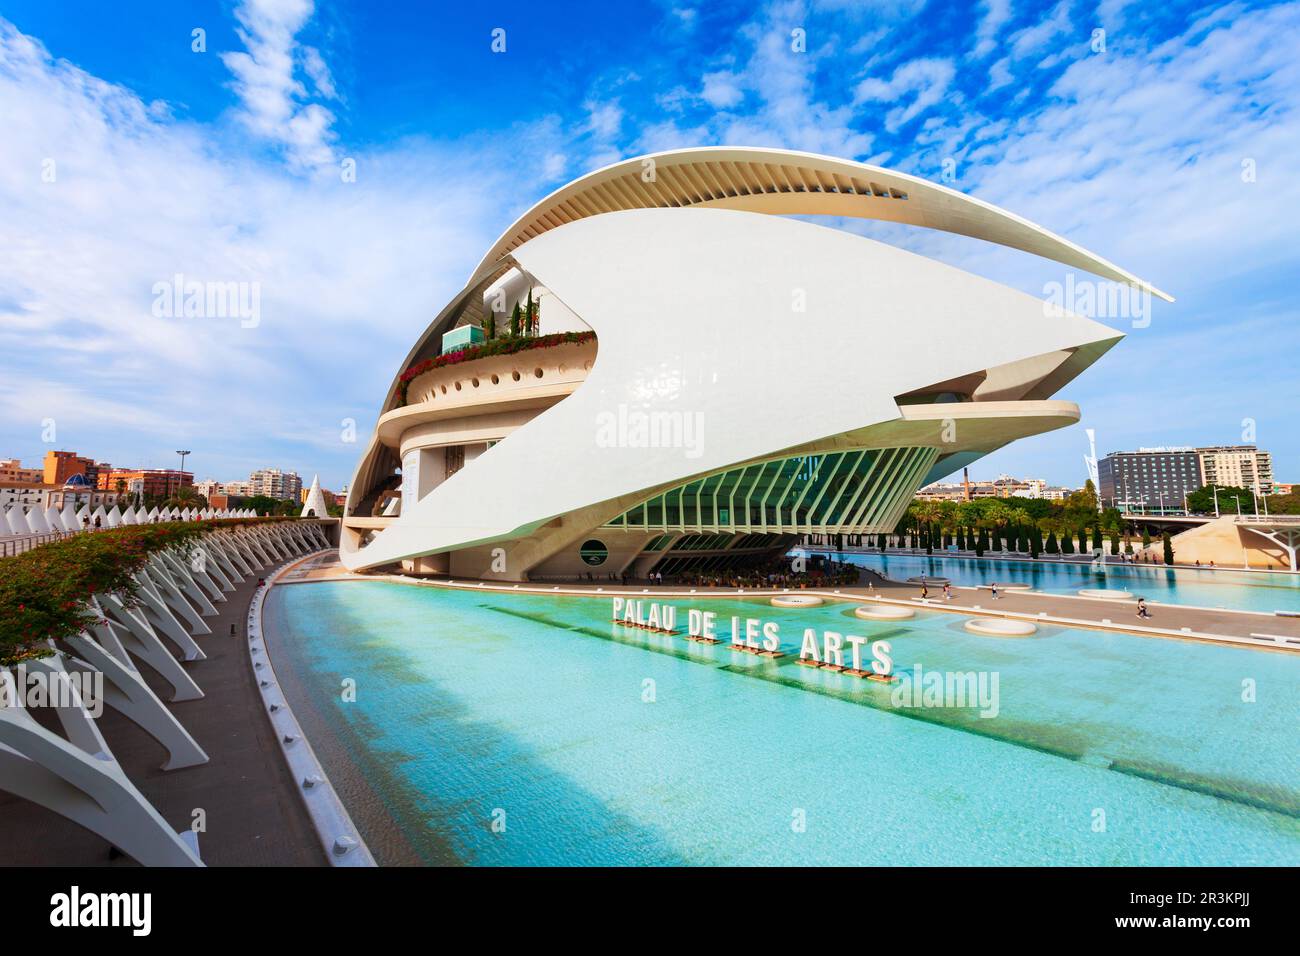 Valencia, Spagna - 16 ottobre 2021: Palau de les Arts Reina Sofia o Regina Sofia Palace of Arts è un teatro lirico, centro d'arte di Santiago Calatrava A. Foto Stock